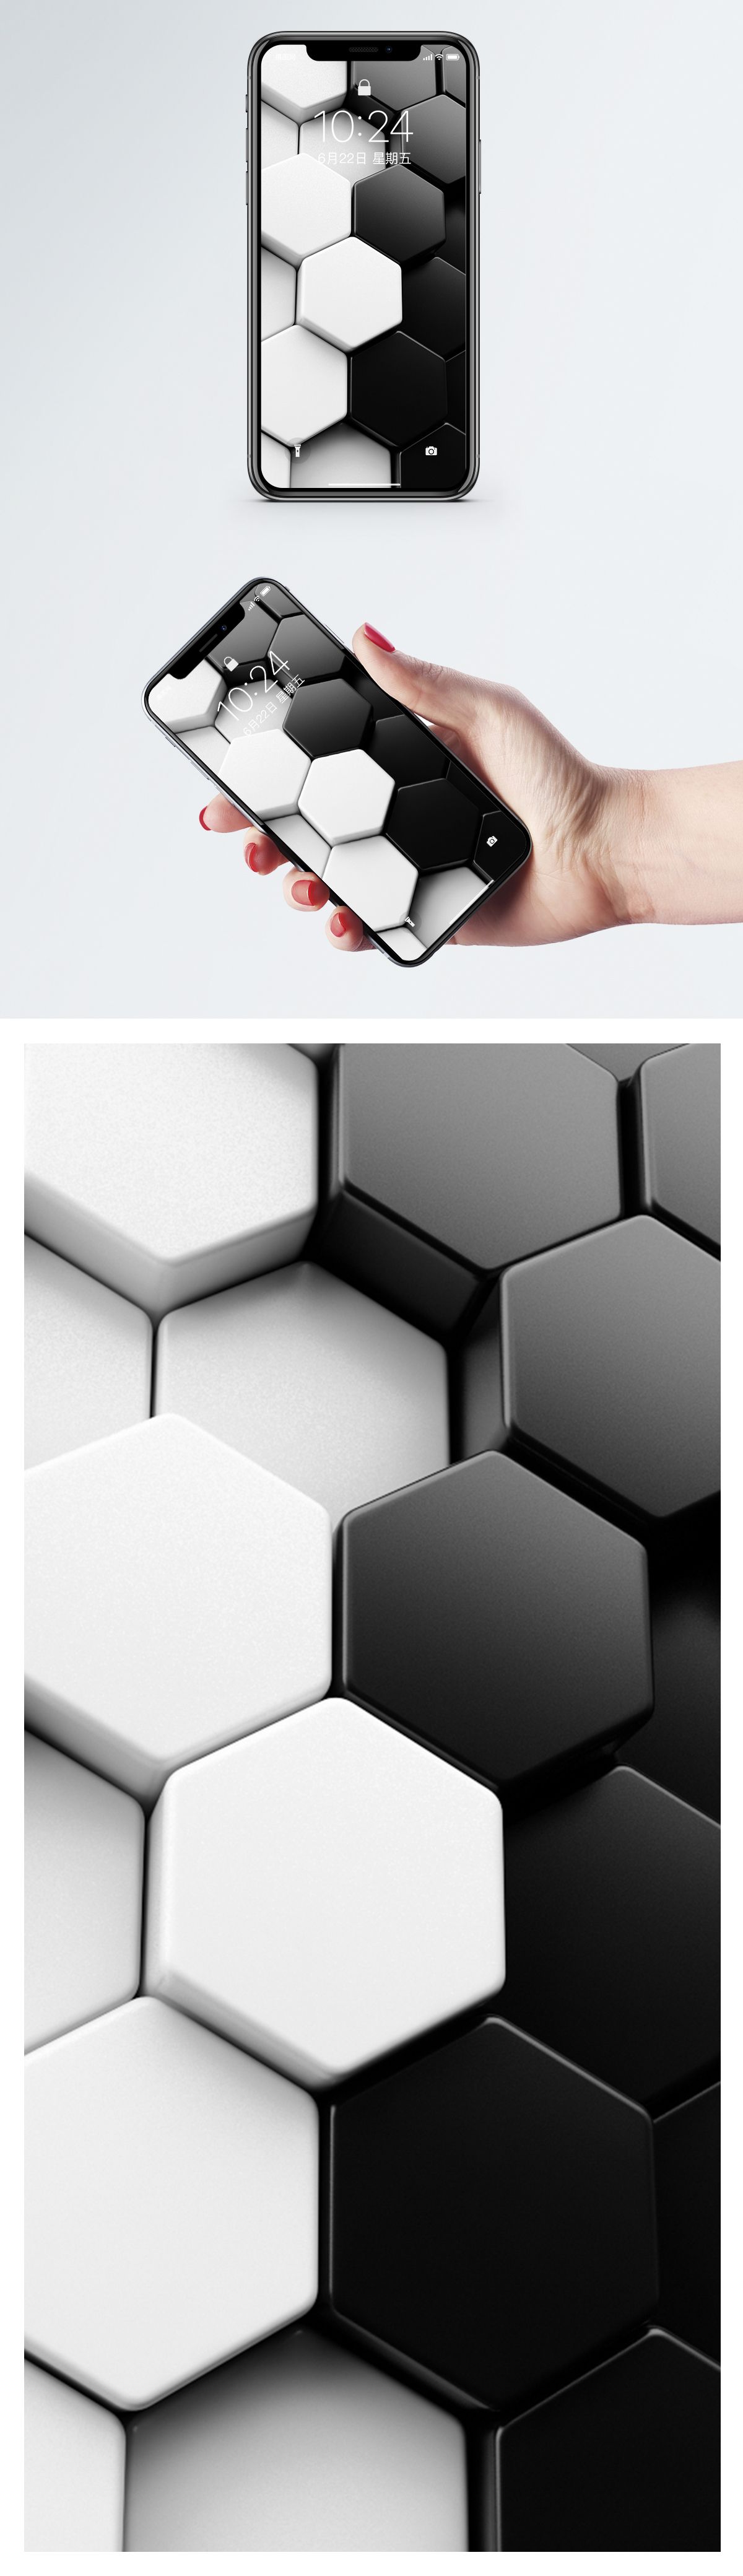 Three D Wallpaper For Mobile - HD Wallpaper 